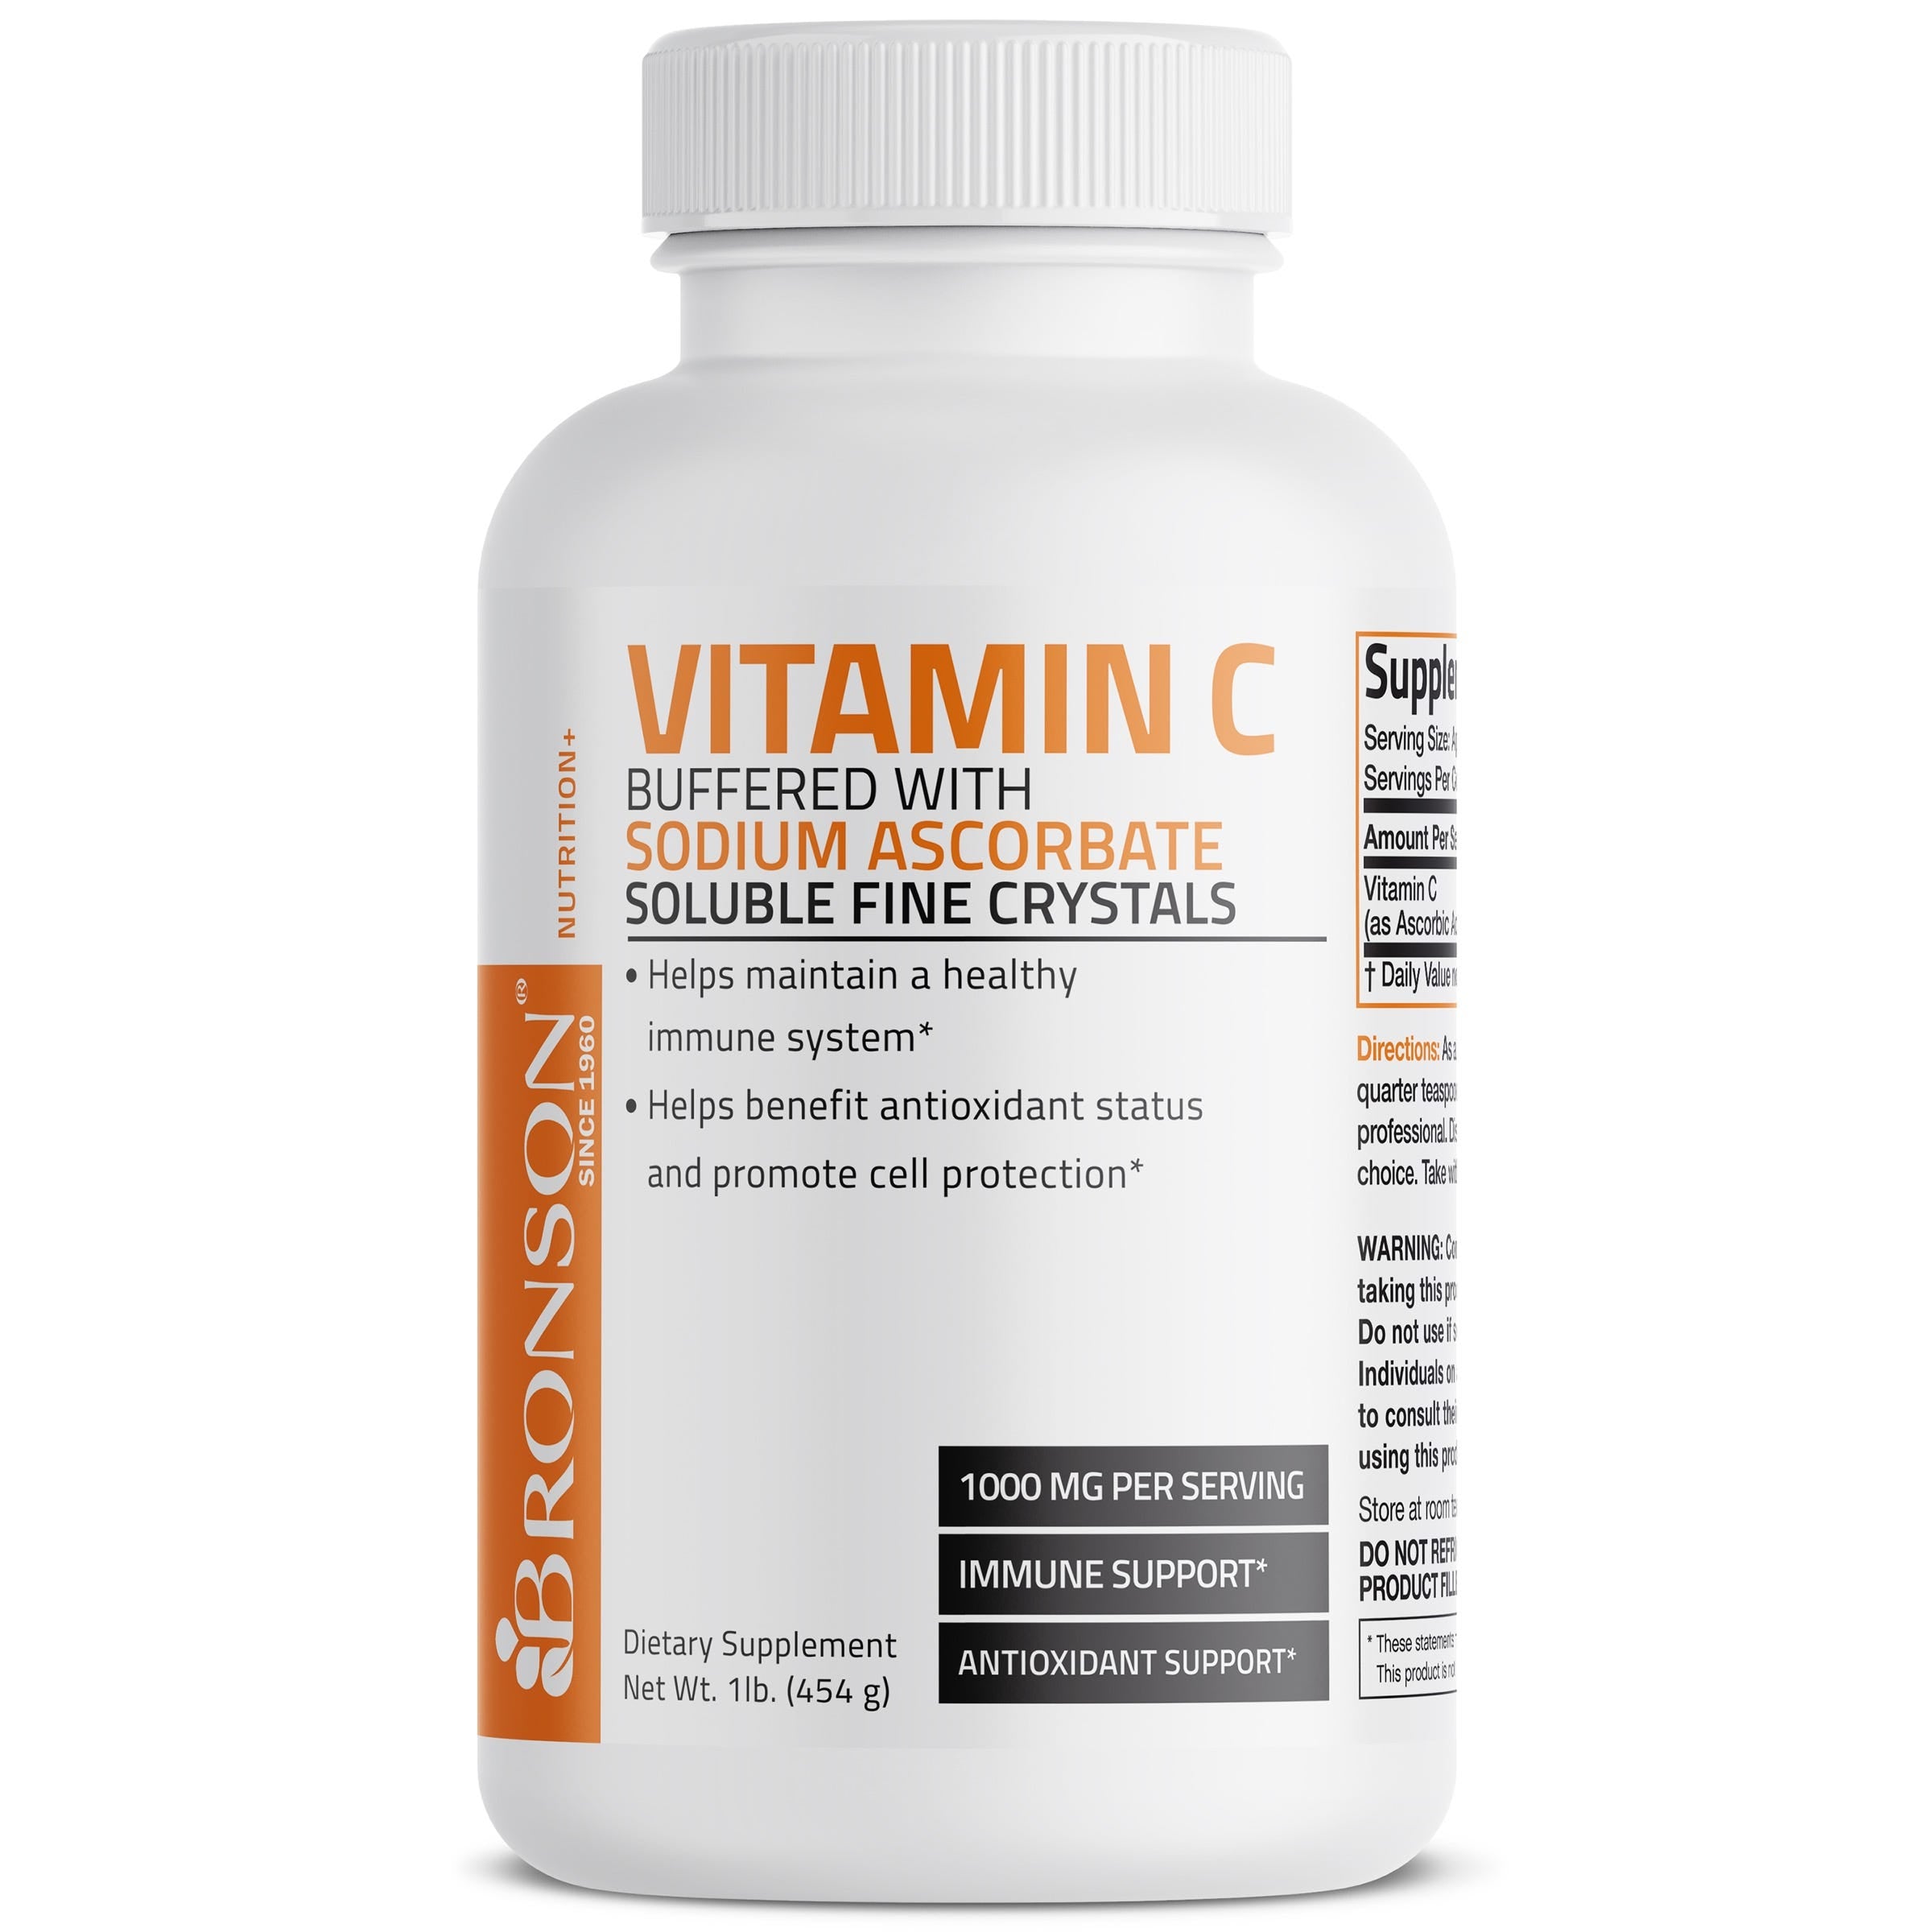 Buffered Vitamin C Ascorbic Acid Crystals - 1,000 mg view 3 of 5